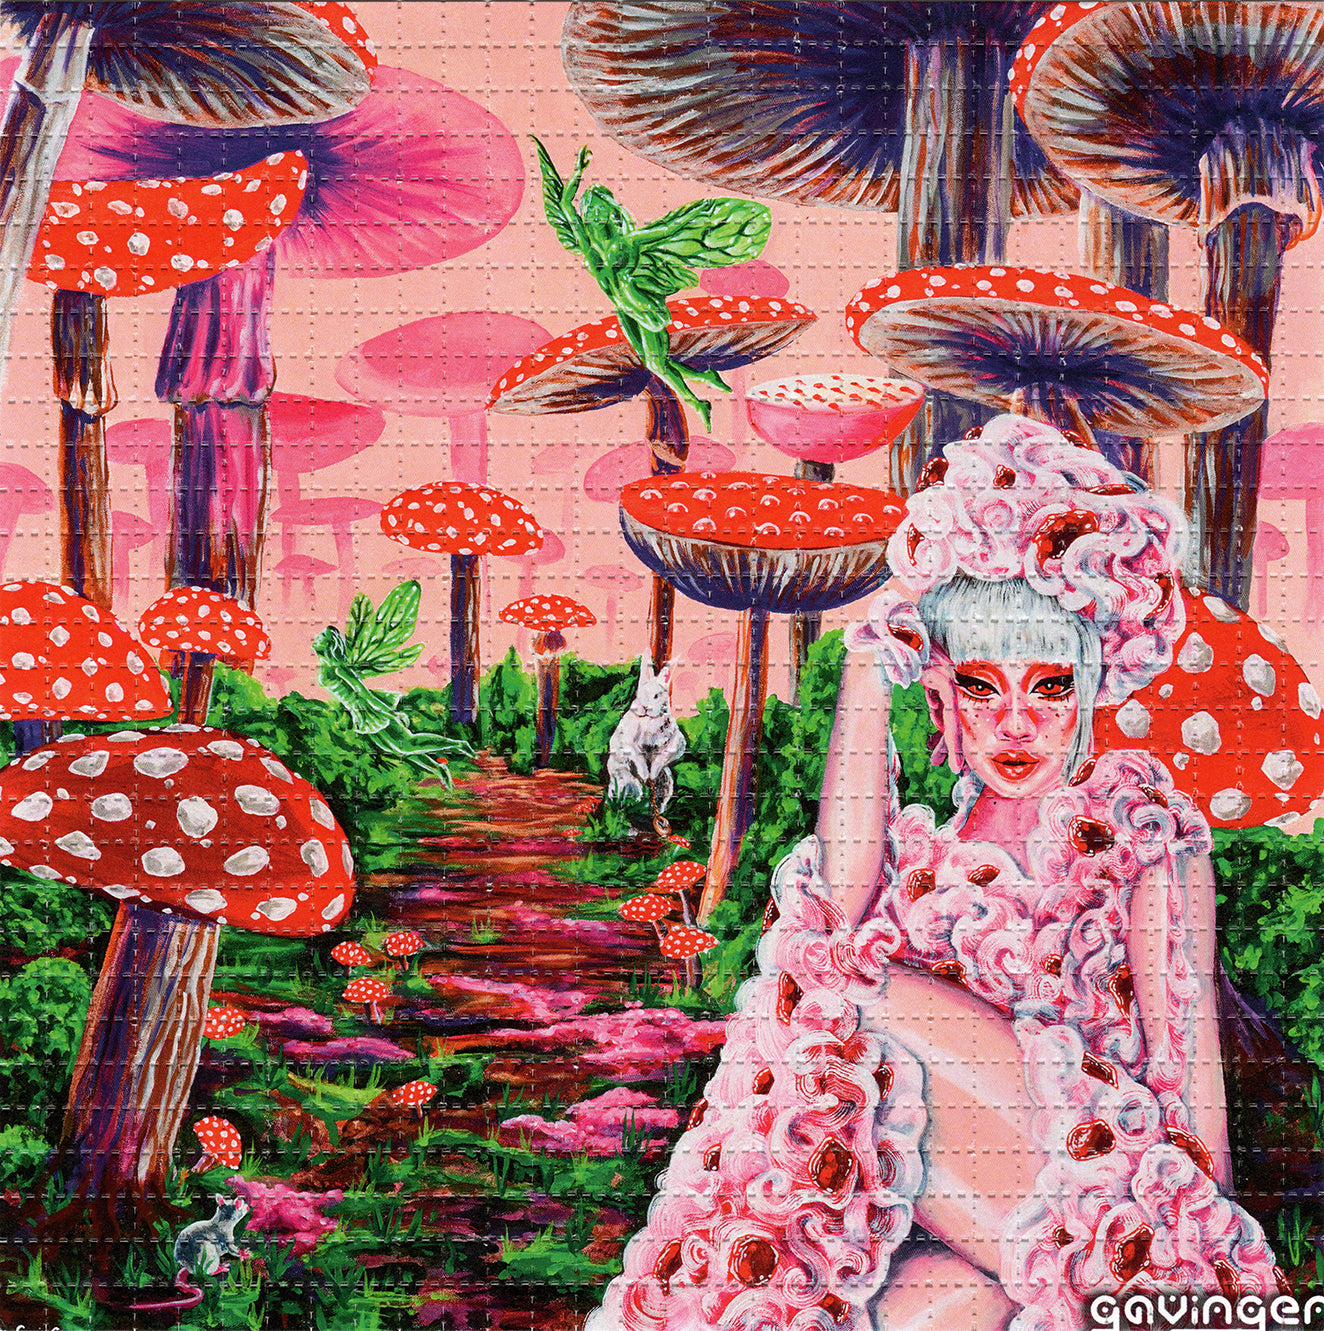 Red Alice in Shroomland by GavinGerArt Signed Limited Edition LSD blotter art print